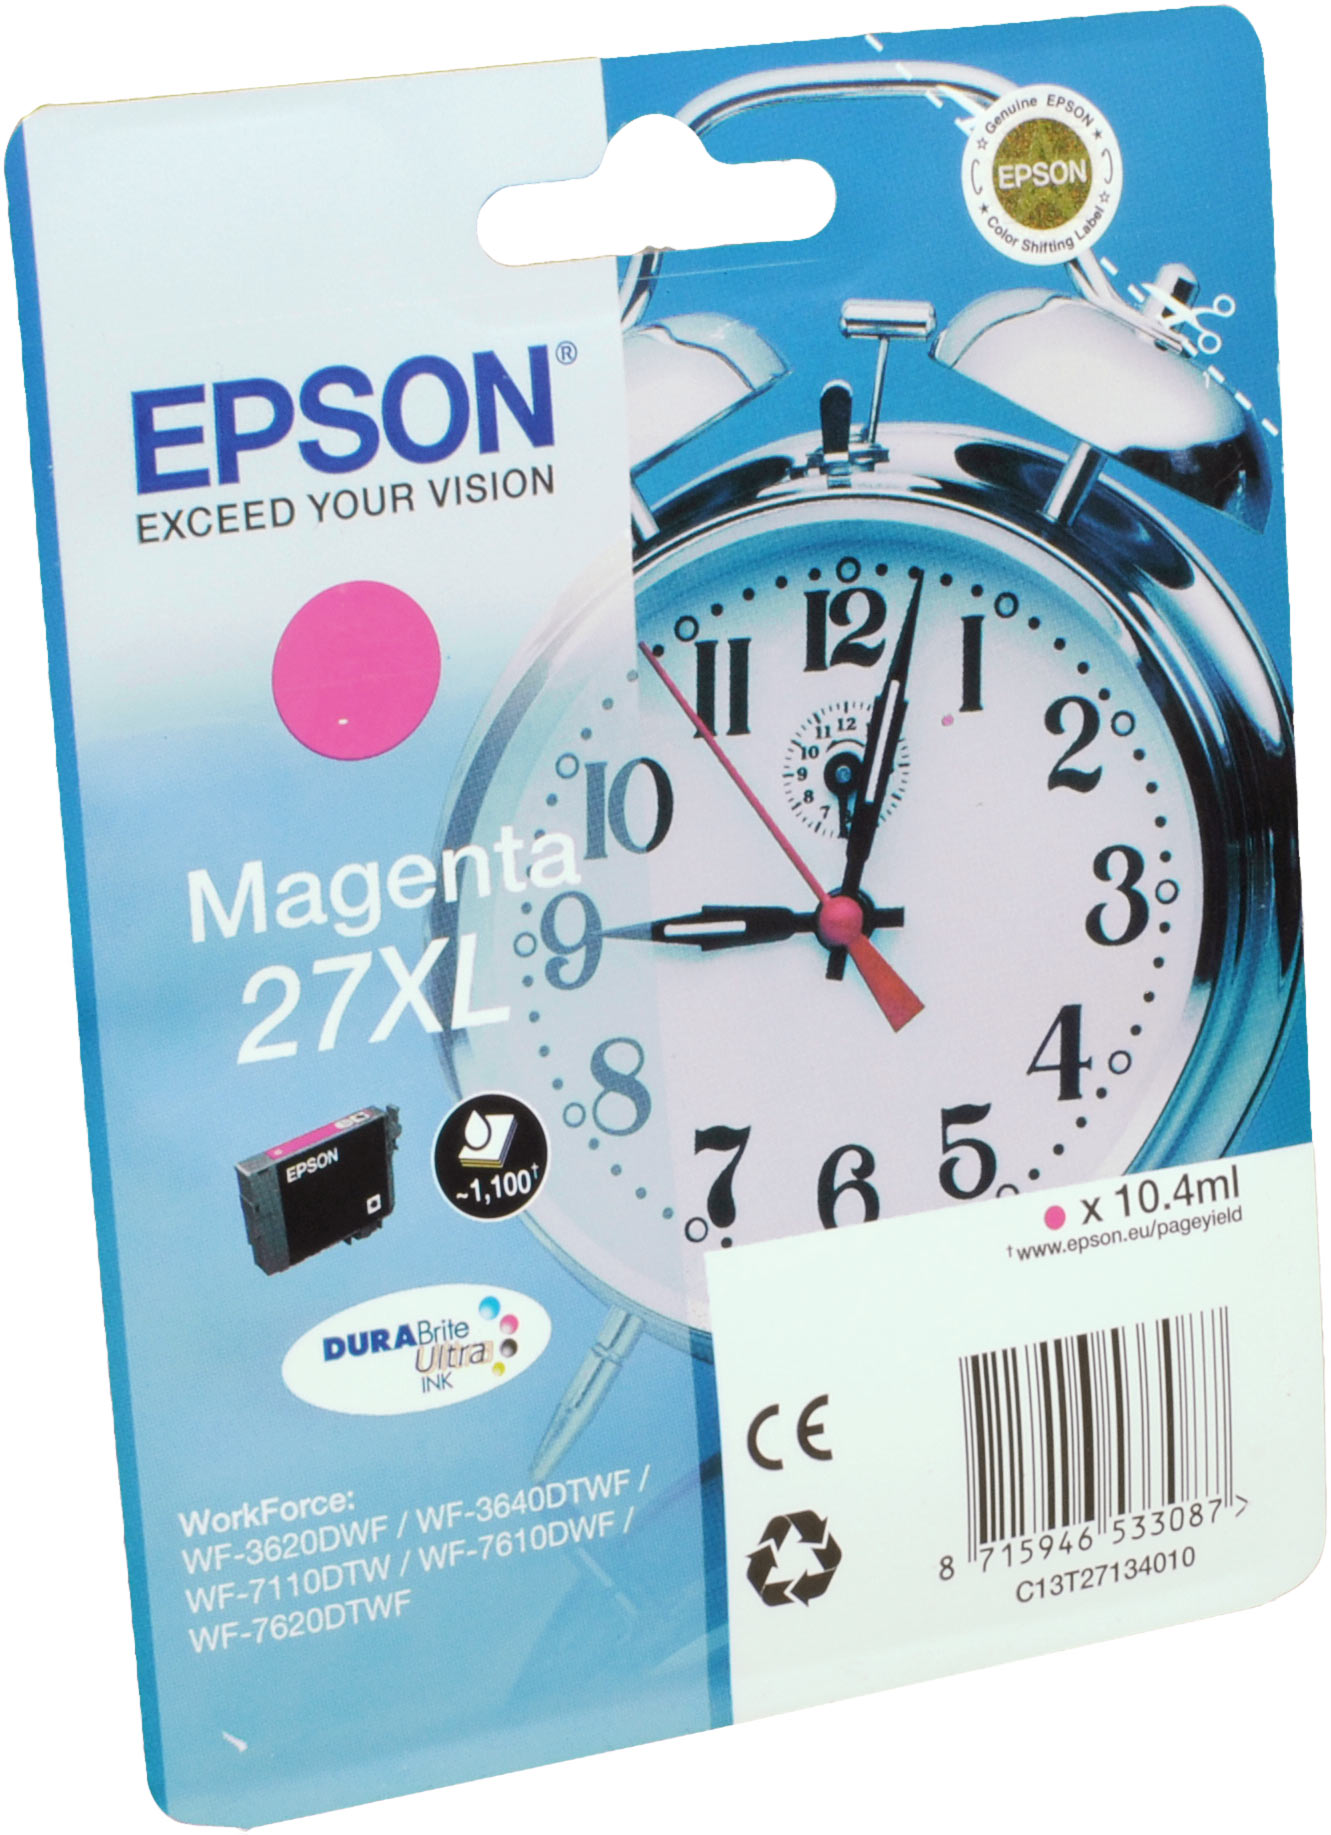 Epson Tinte C13T27134012 Magenta 27XL  magenta